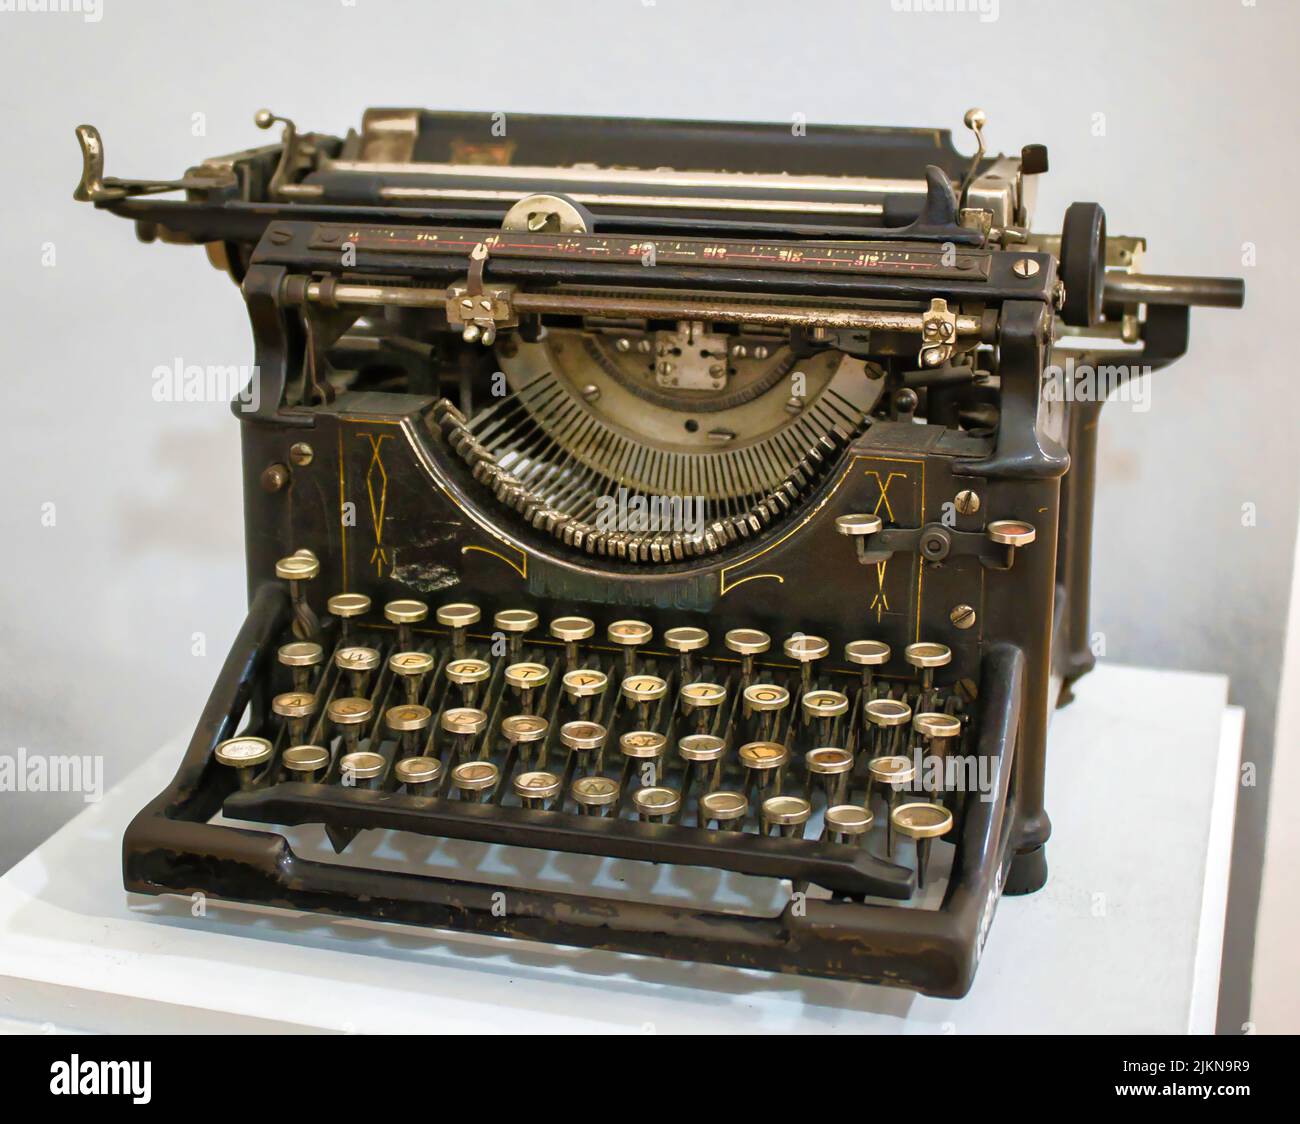 Maquina de escribir hi-res stock photography and images - Alamy